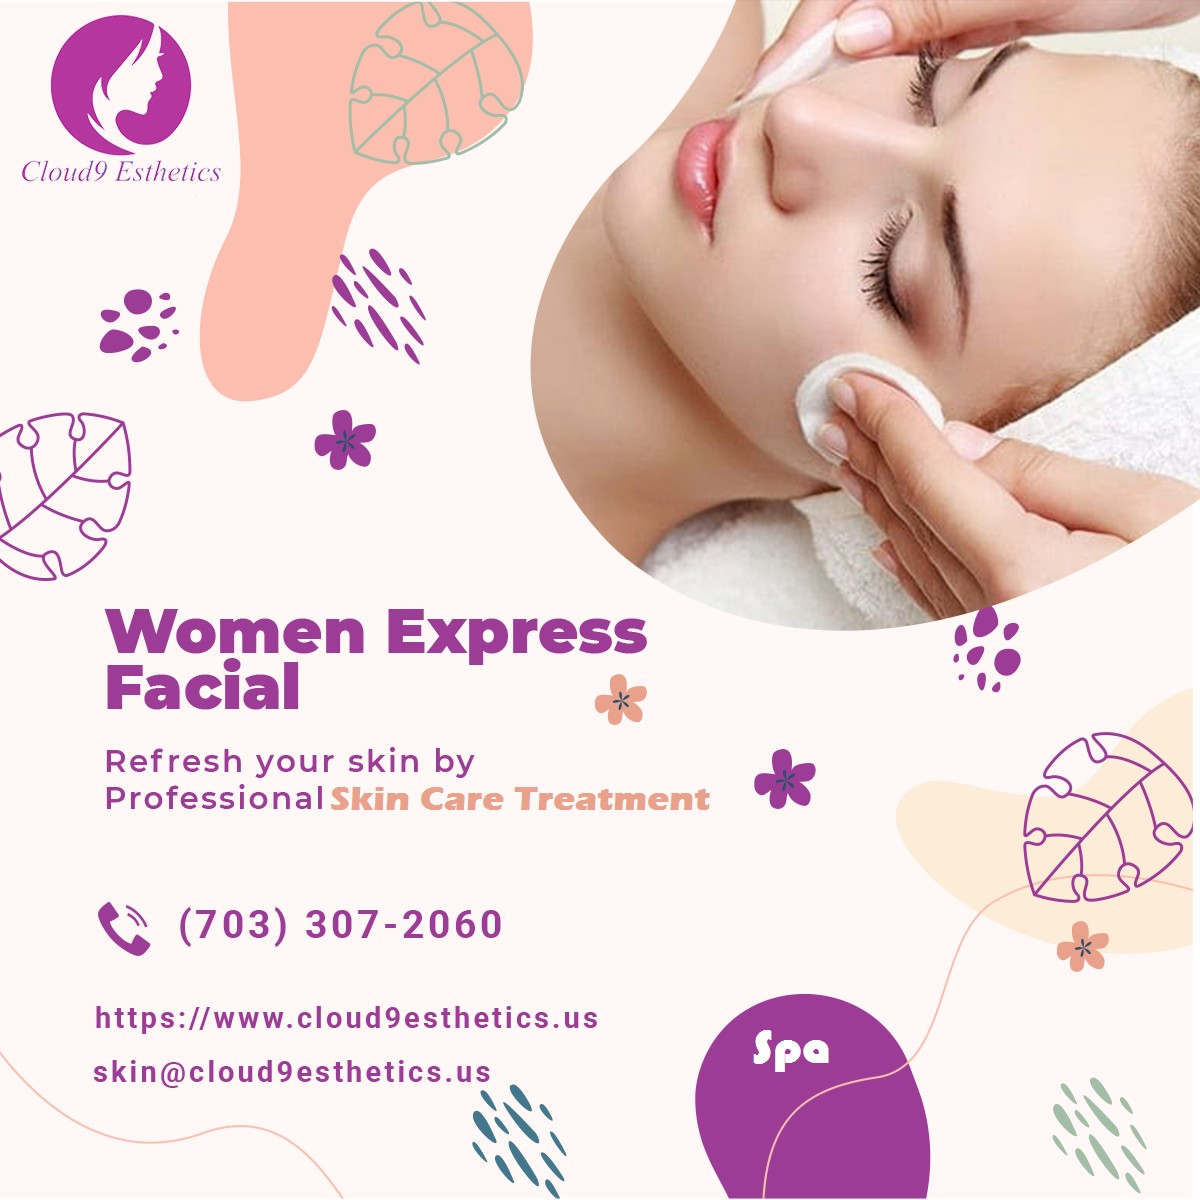 Effective Skin Care Spa Facial Treatment: Cloud9 Esthetics Spa Services